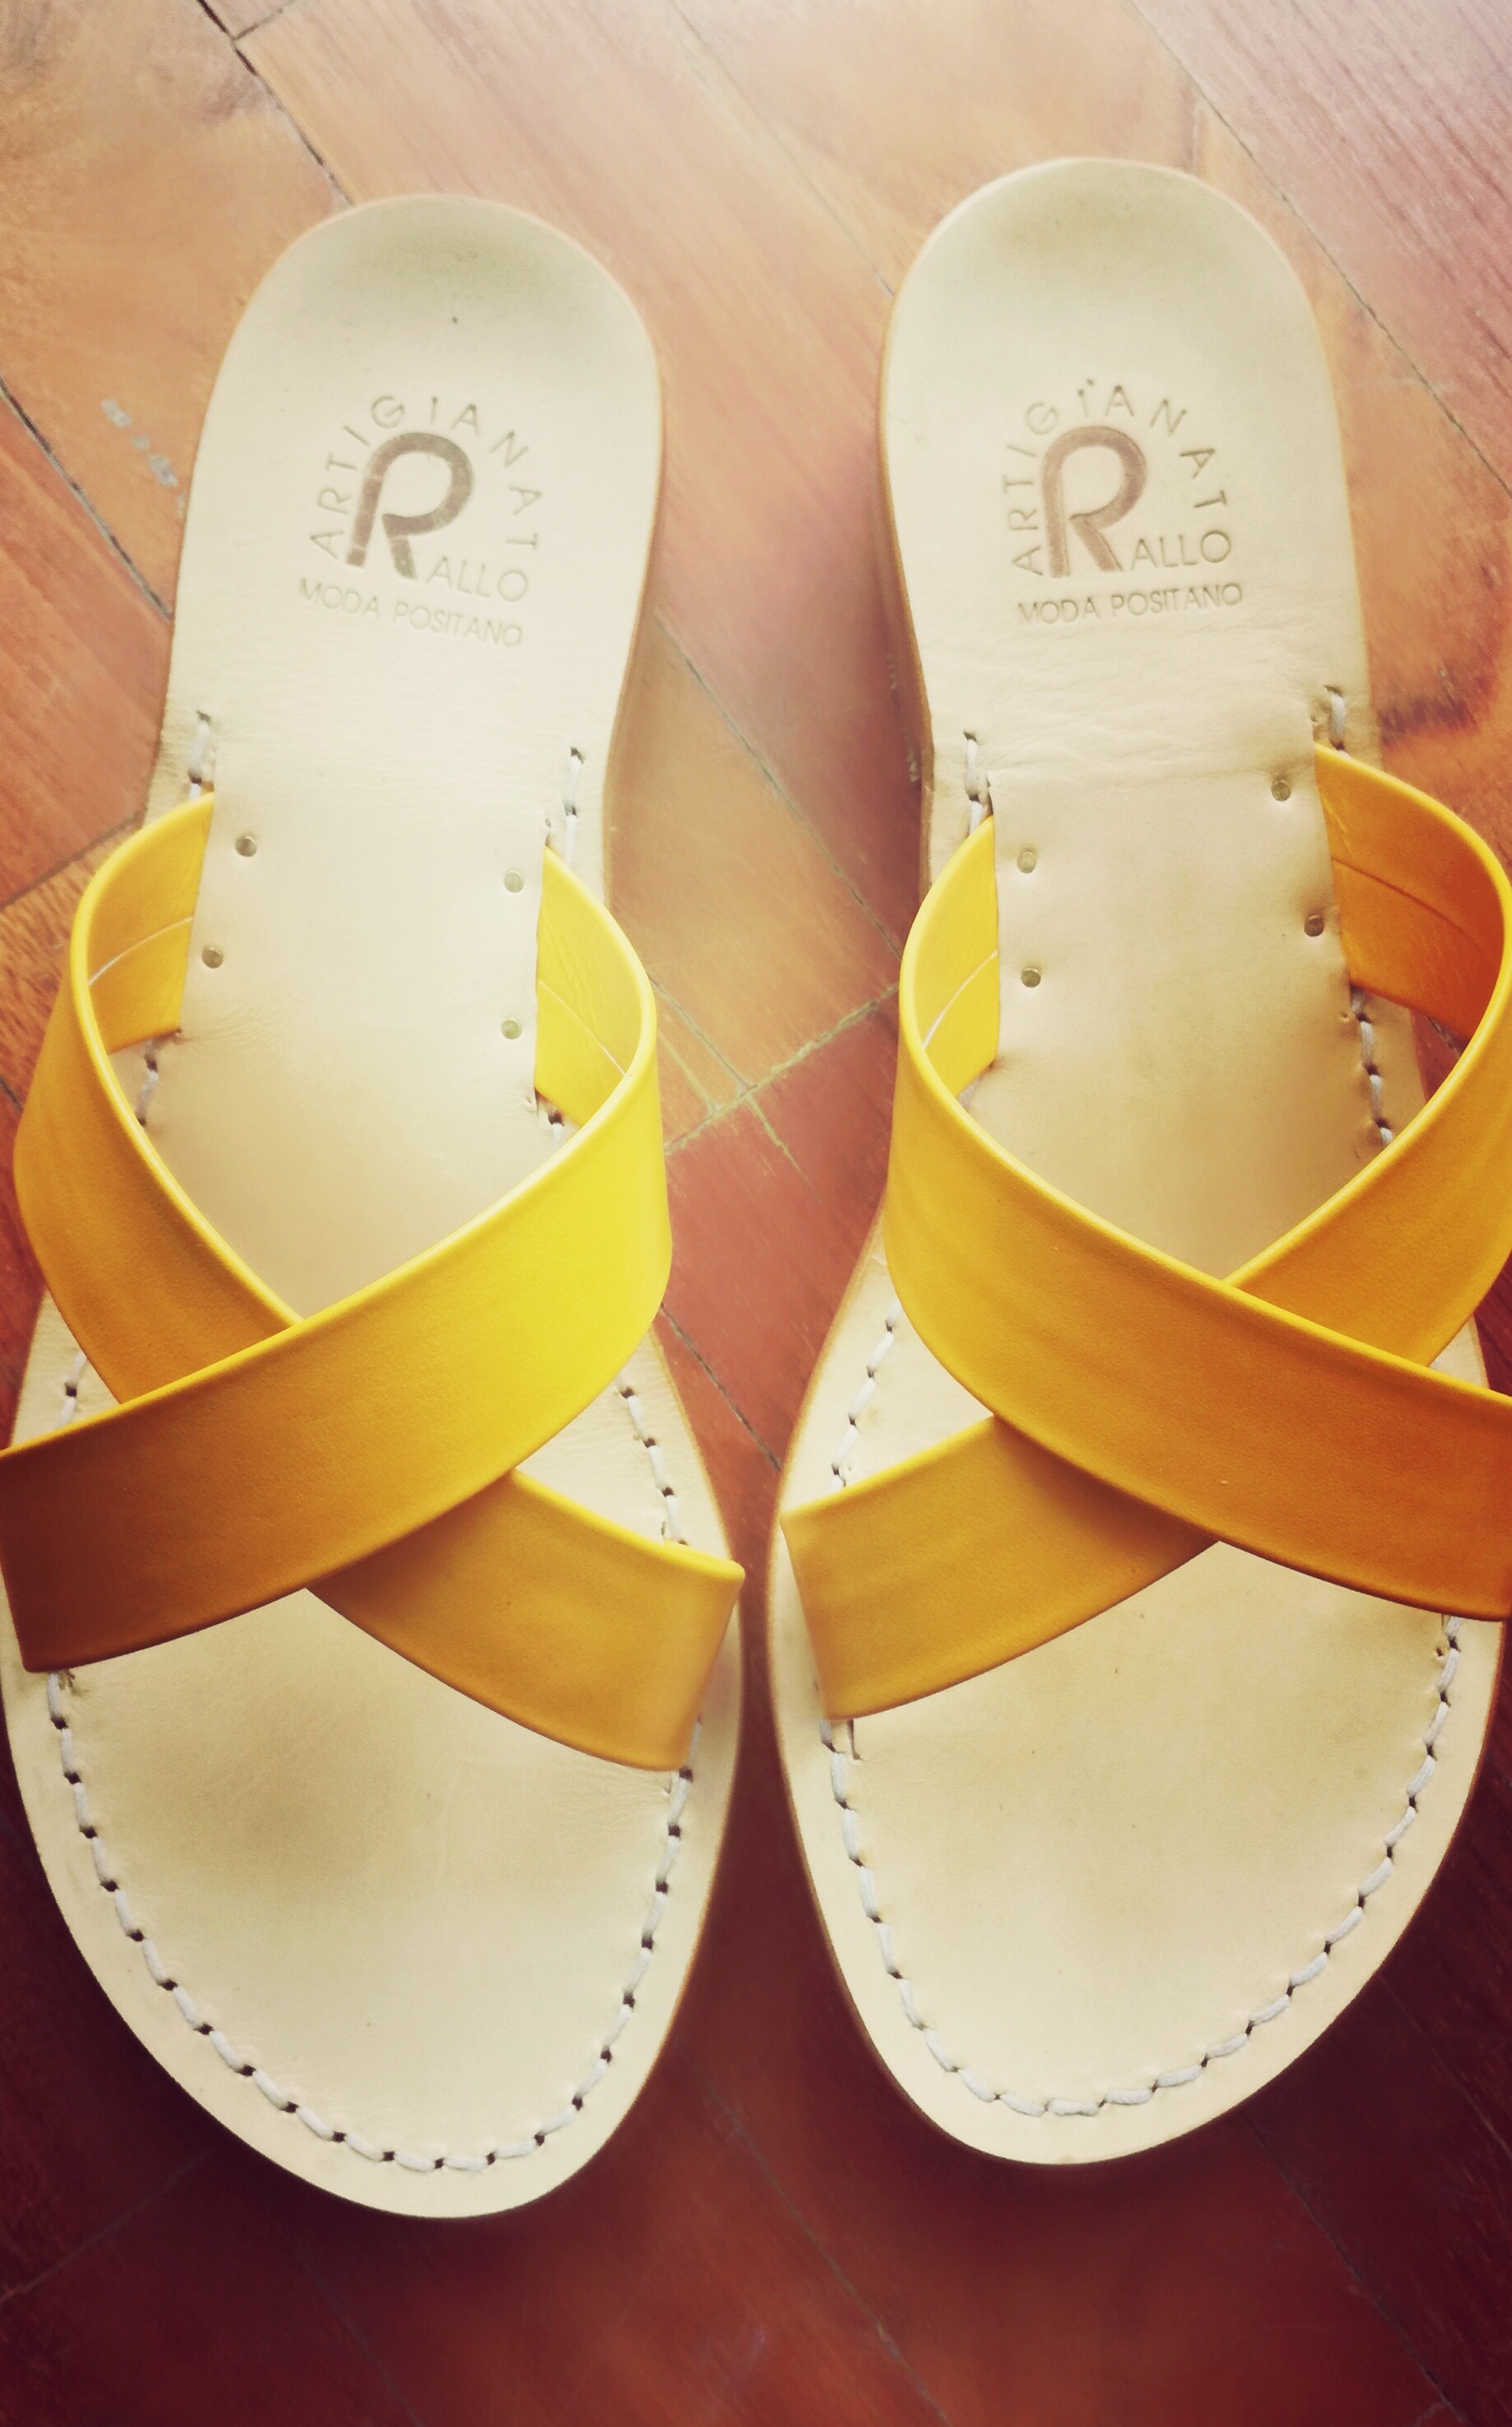 Positano handmade sandals with yellow straps